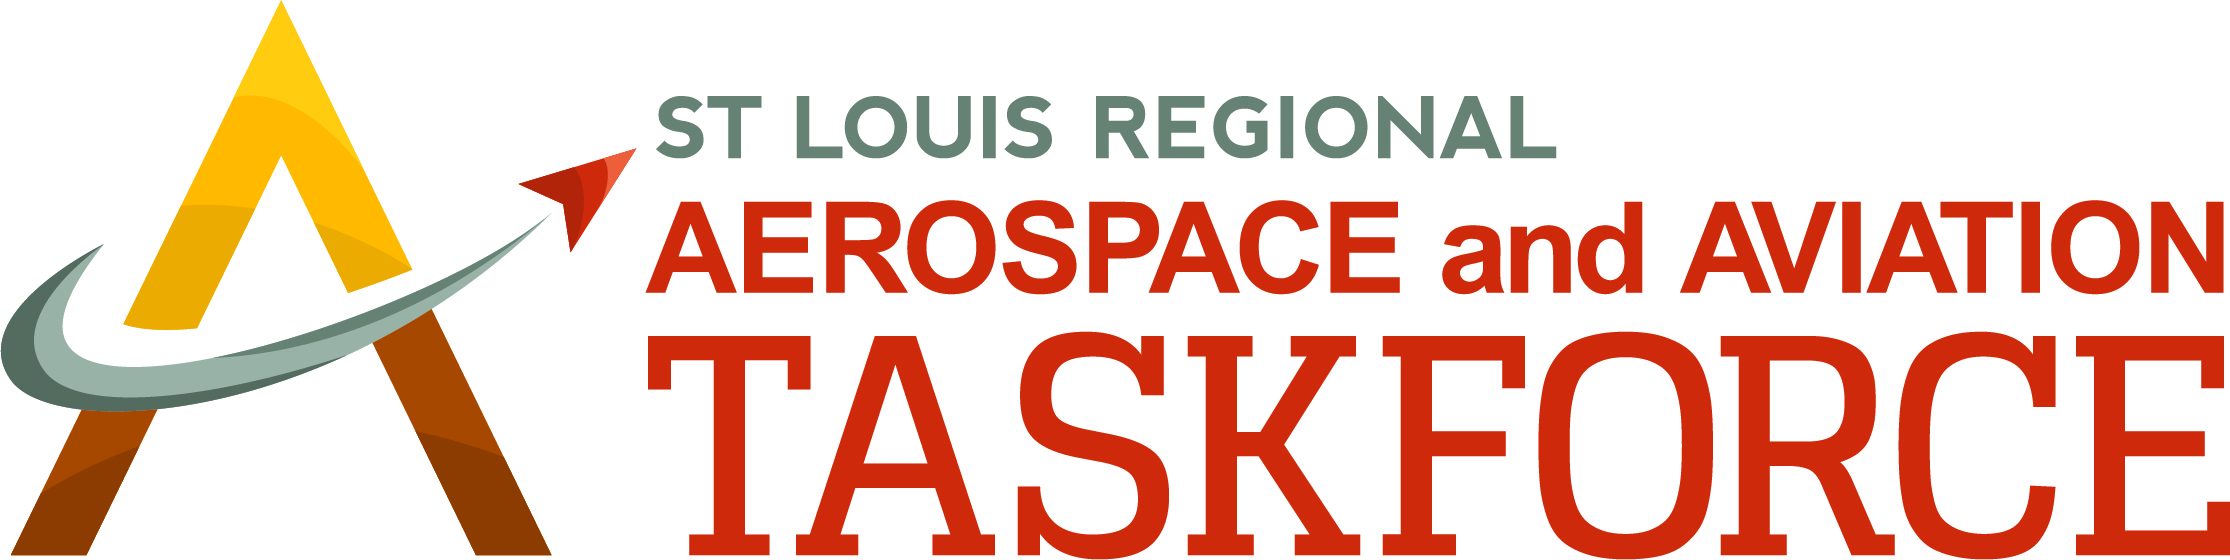 Logo for St. Louis Regional Aerospace and Aviation Taskforce